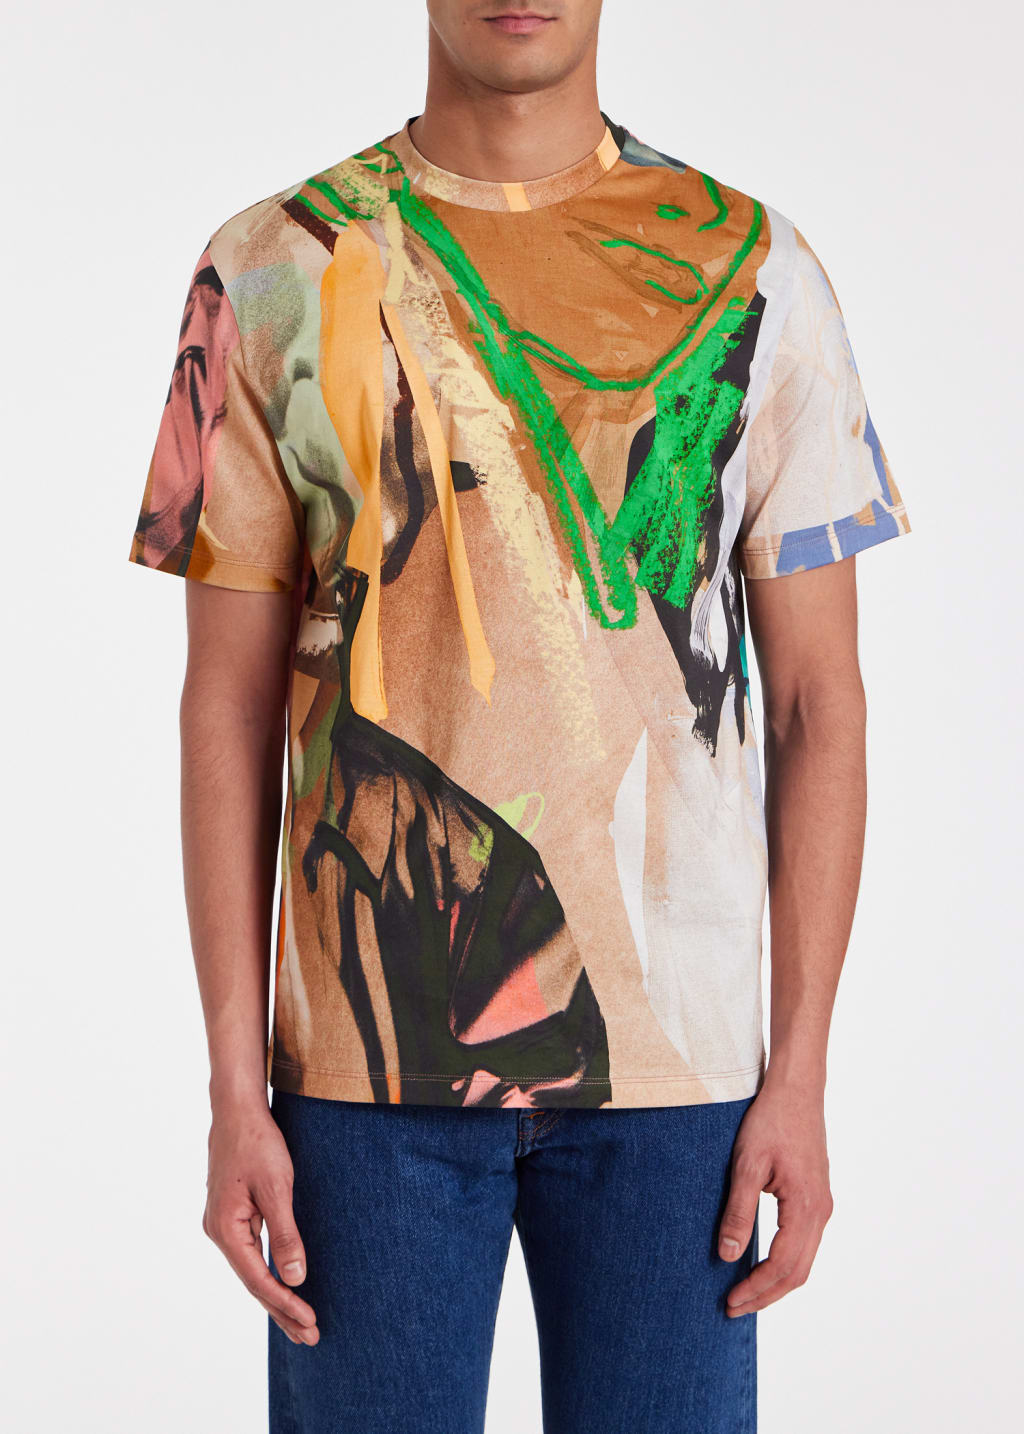 Model View - 'Life Drawing' Print Cotton T-Shirt Paul Smith